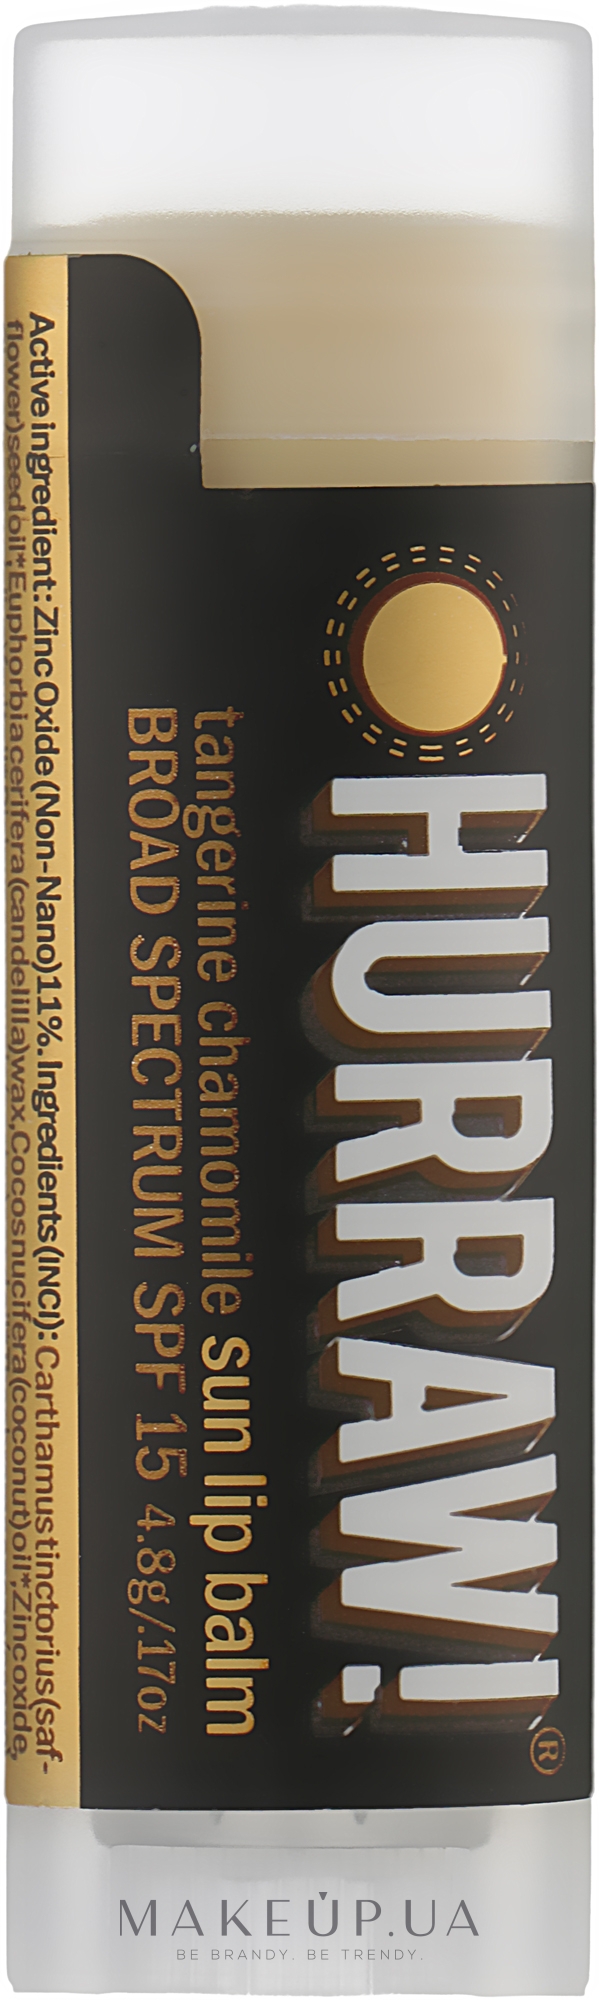 Бальзам для губ - Hurraw Sun Protection Lip Balm SPF15 Limited Edition — фото 4.8g